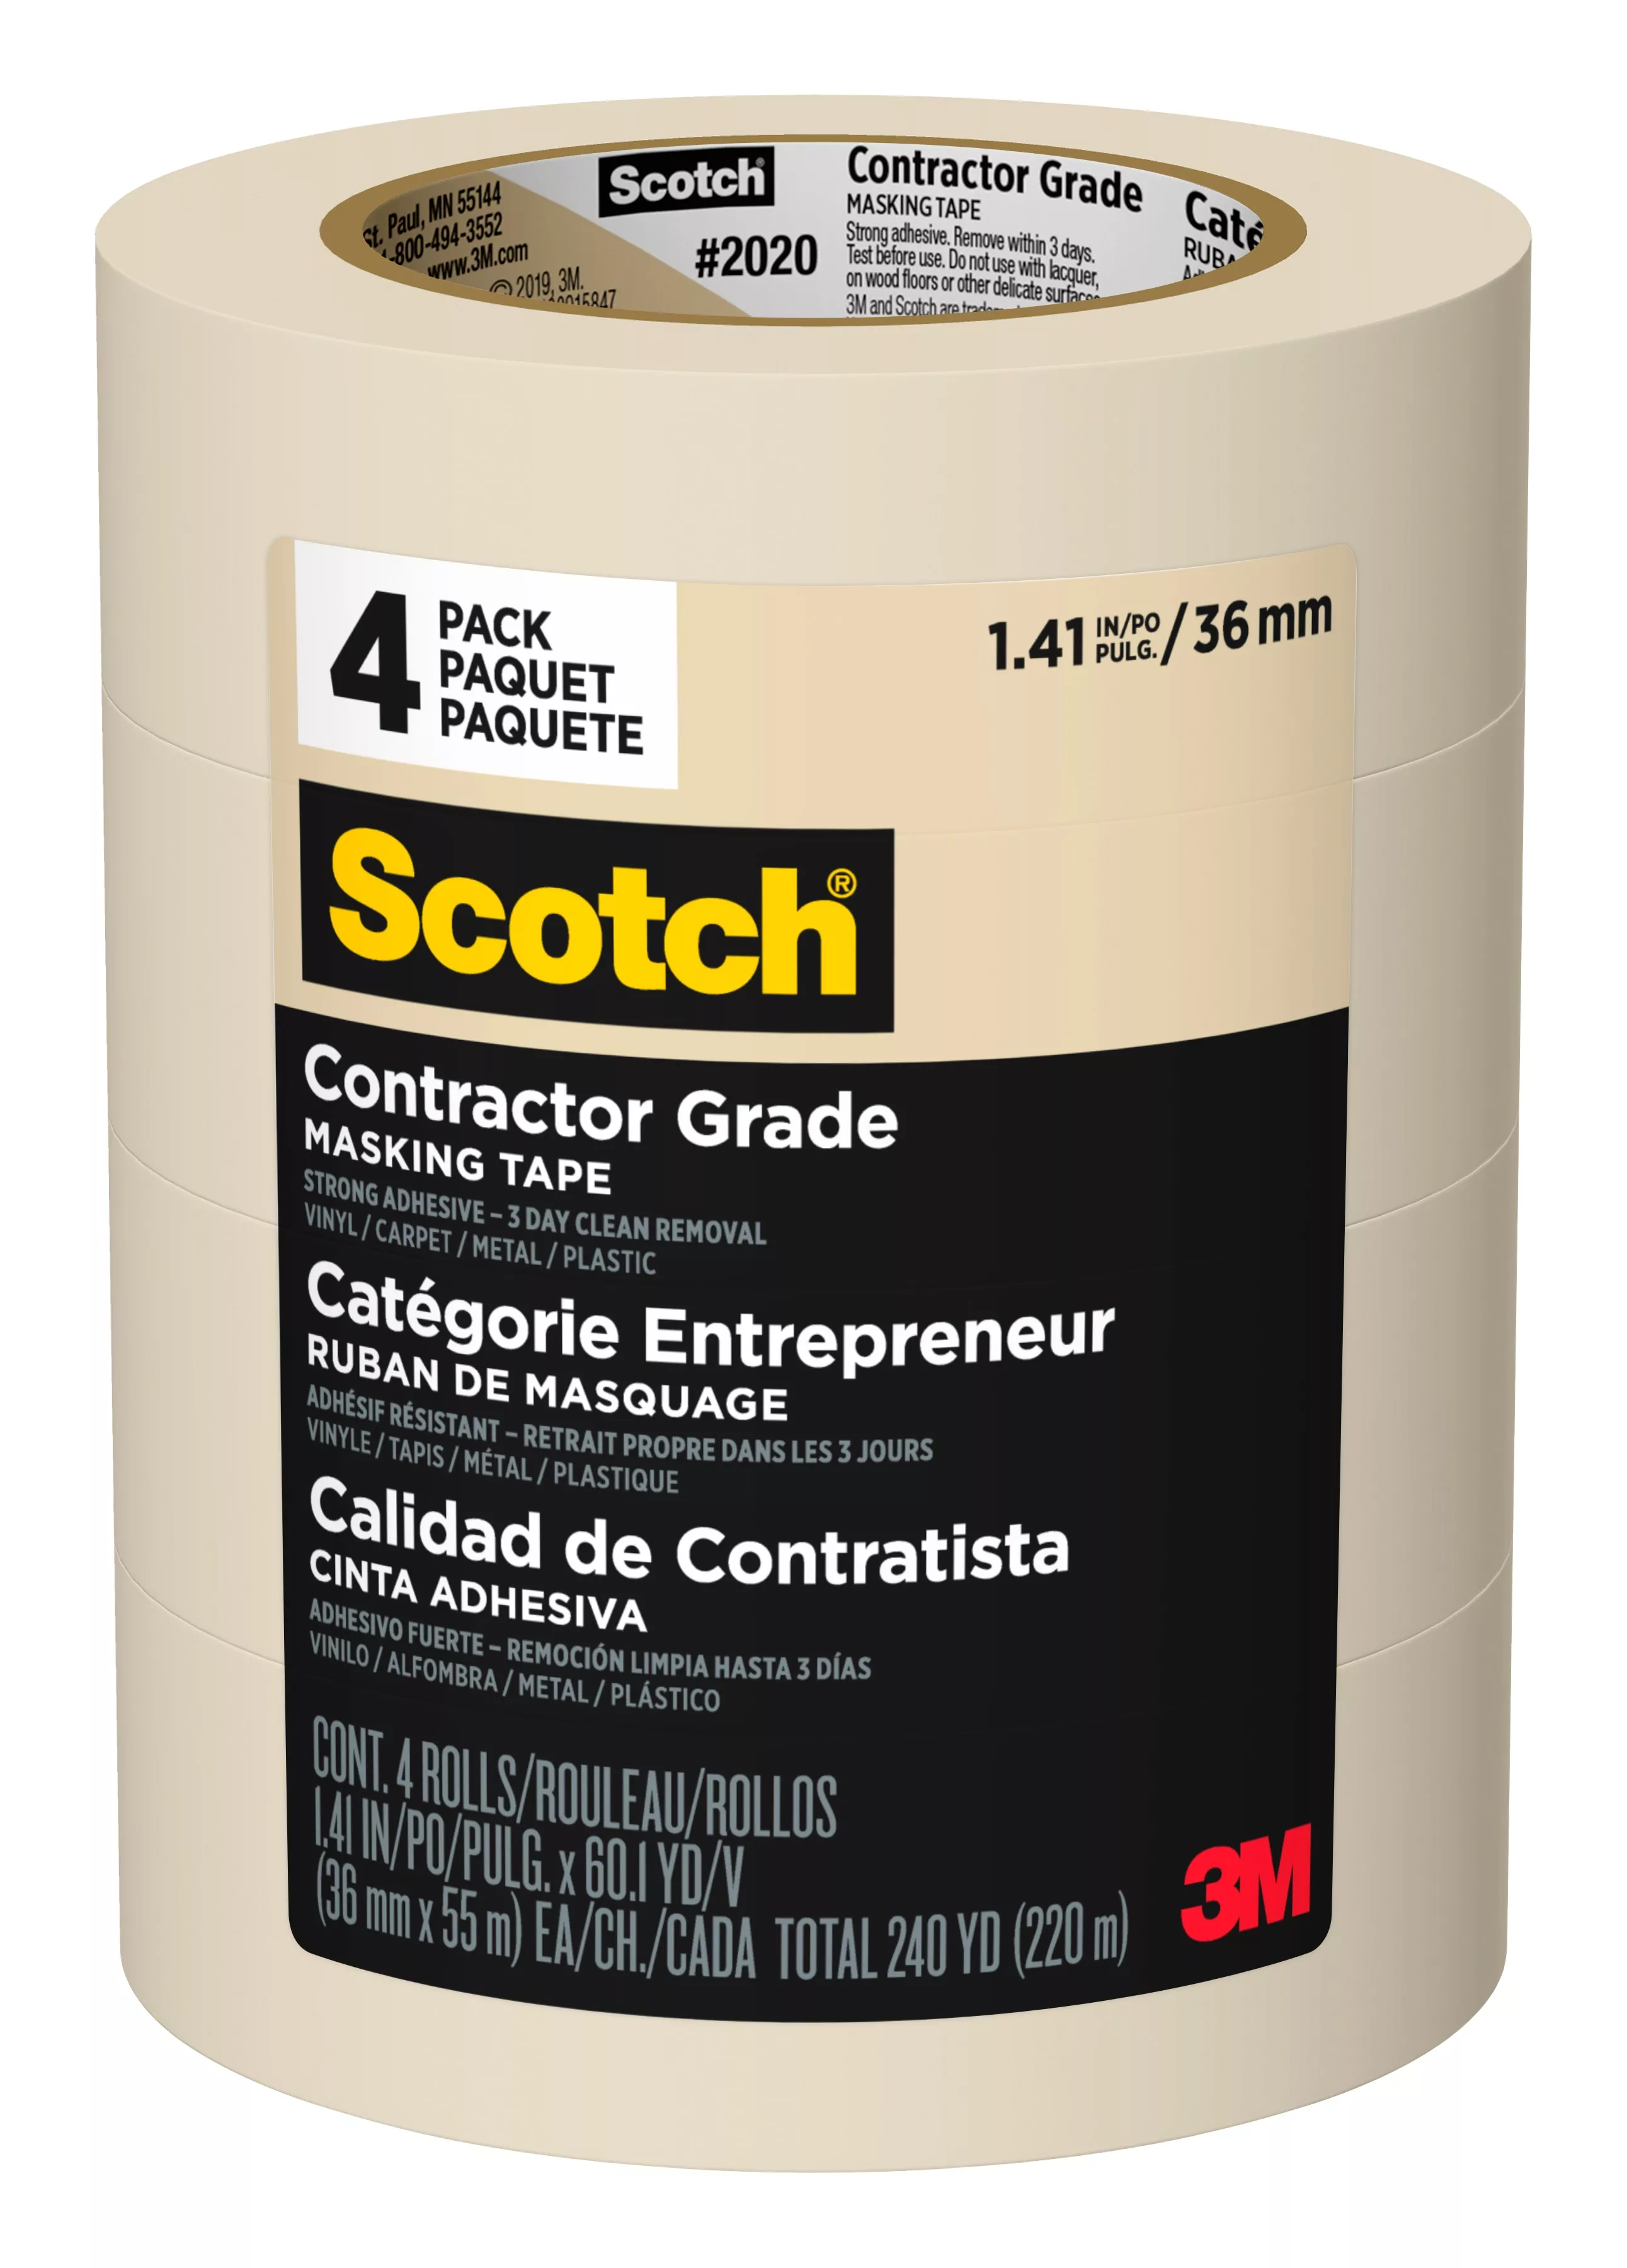 SKU 7100186421 | Scotch®Contractor Grade Masking Tape 2020-36EP4